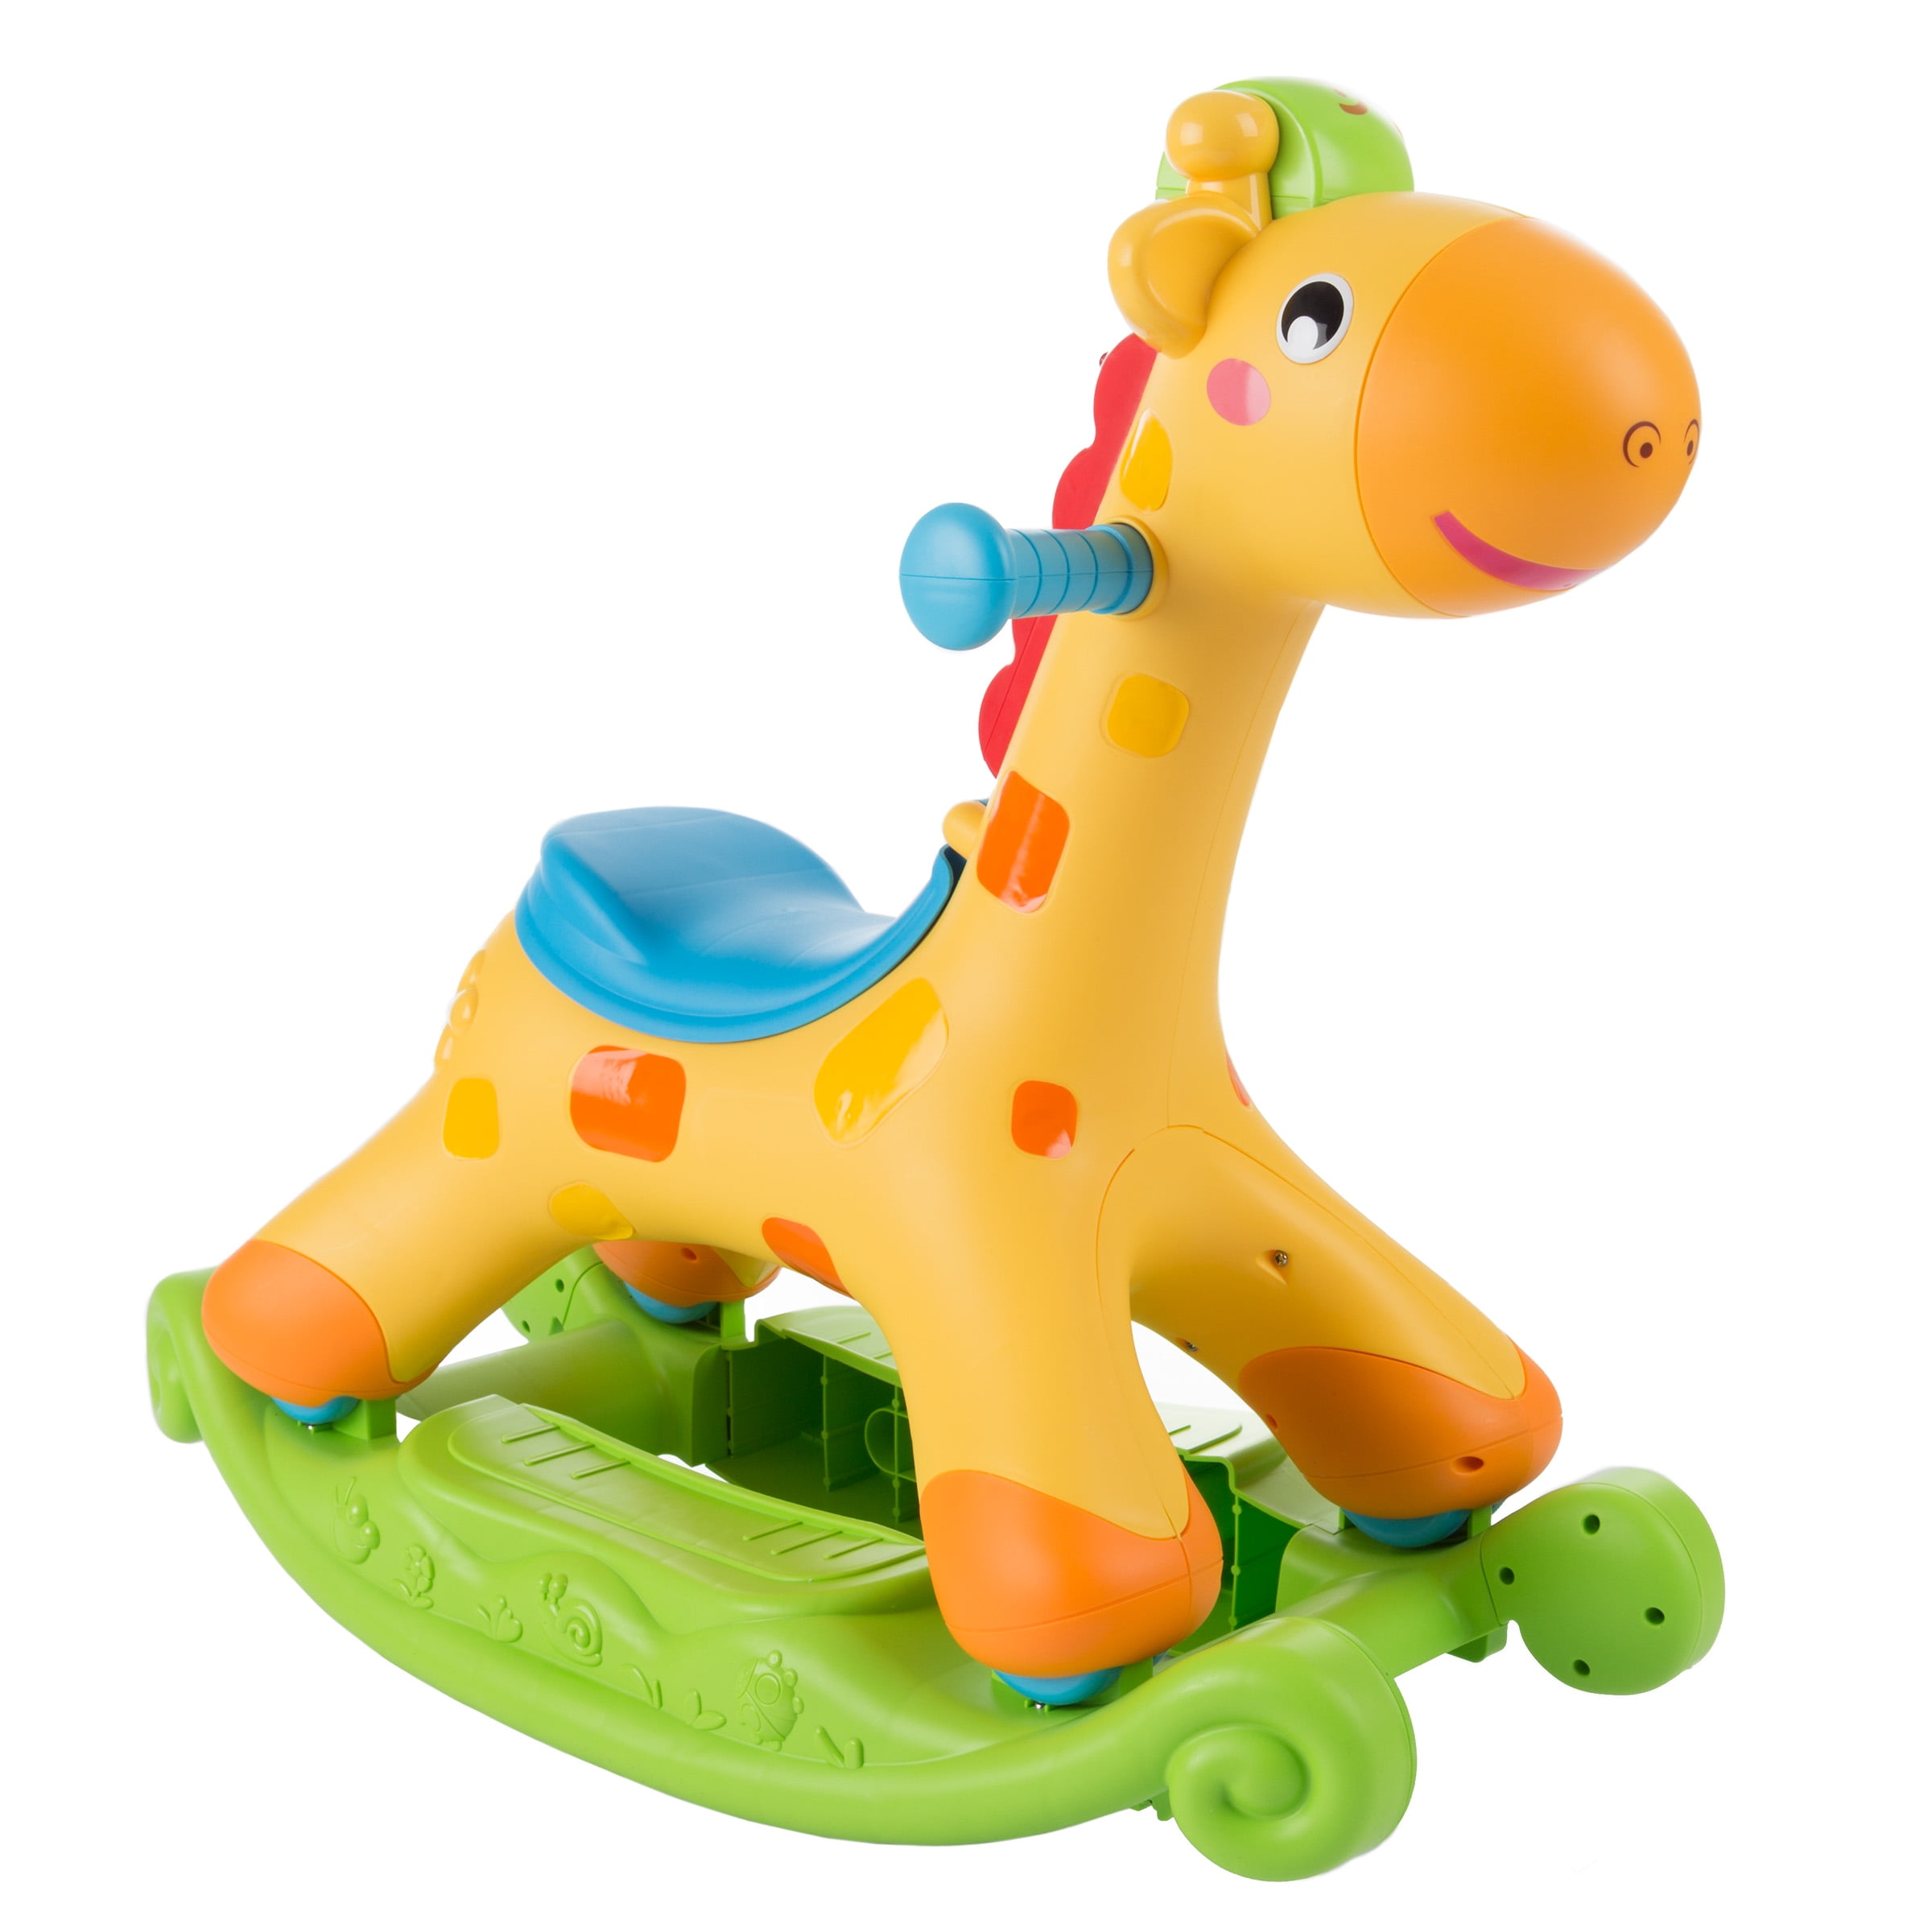 walmart riding horse toy